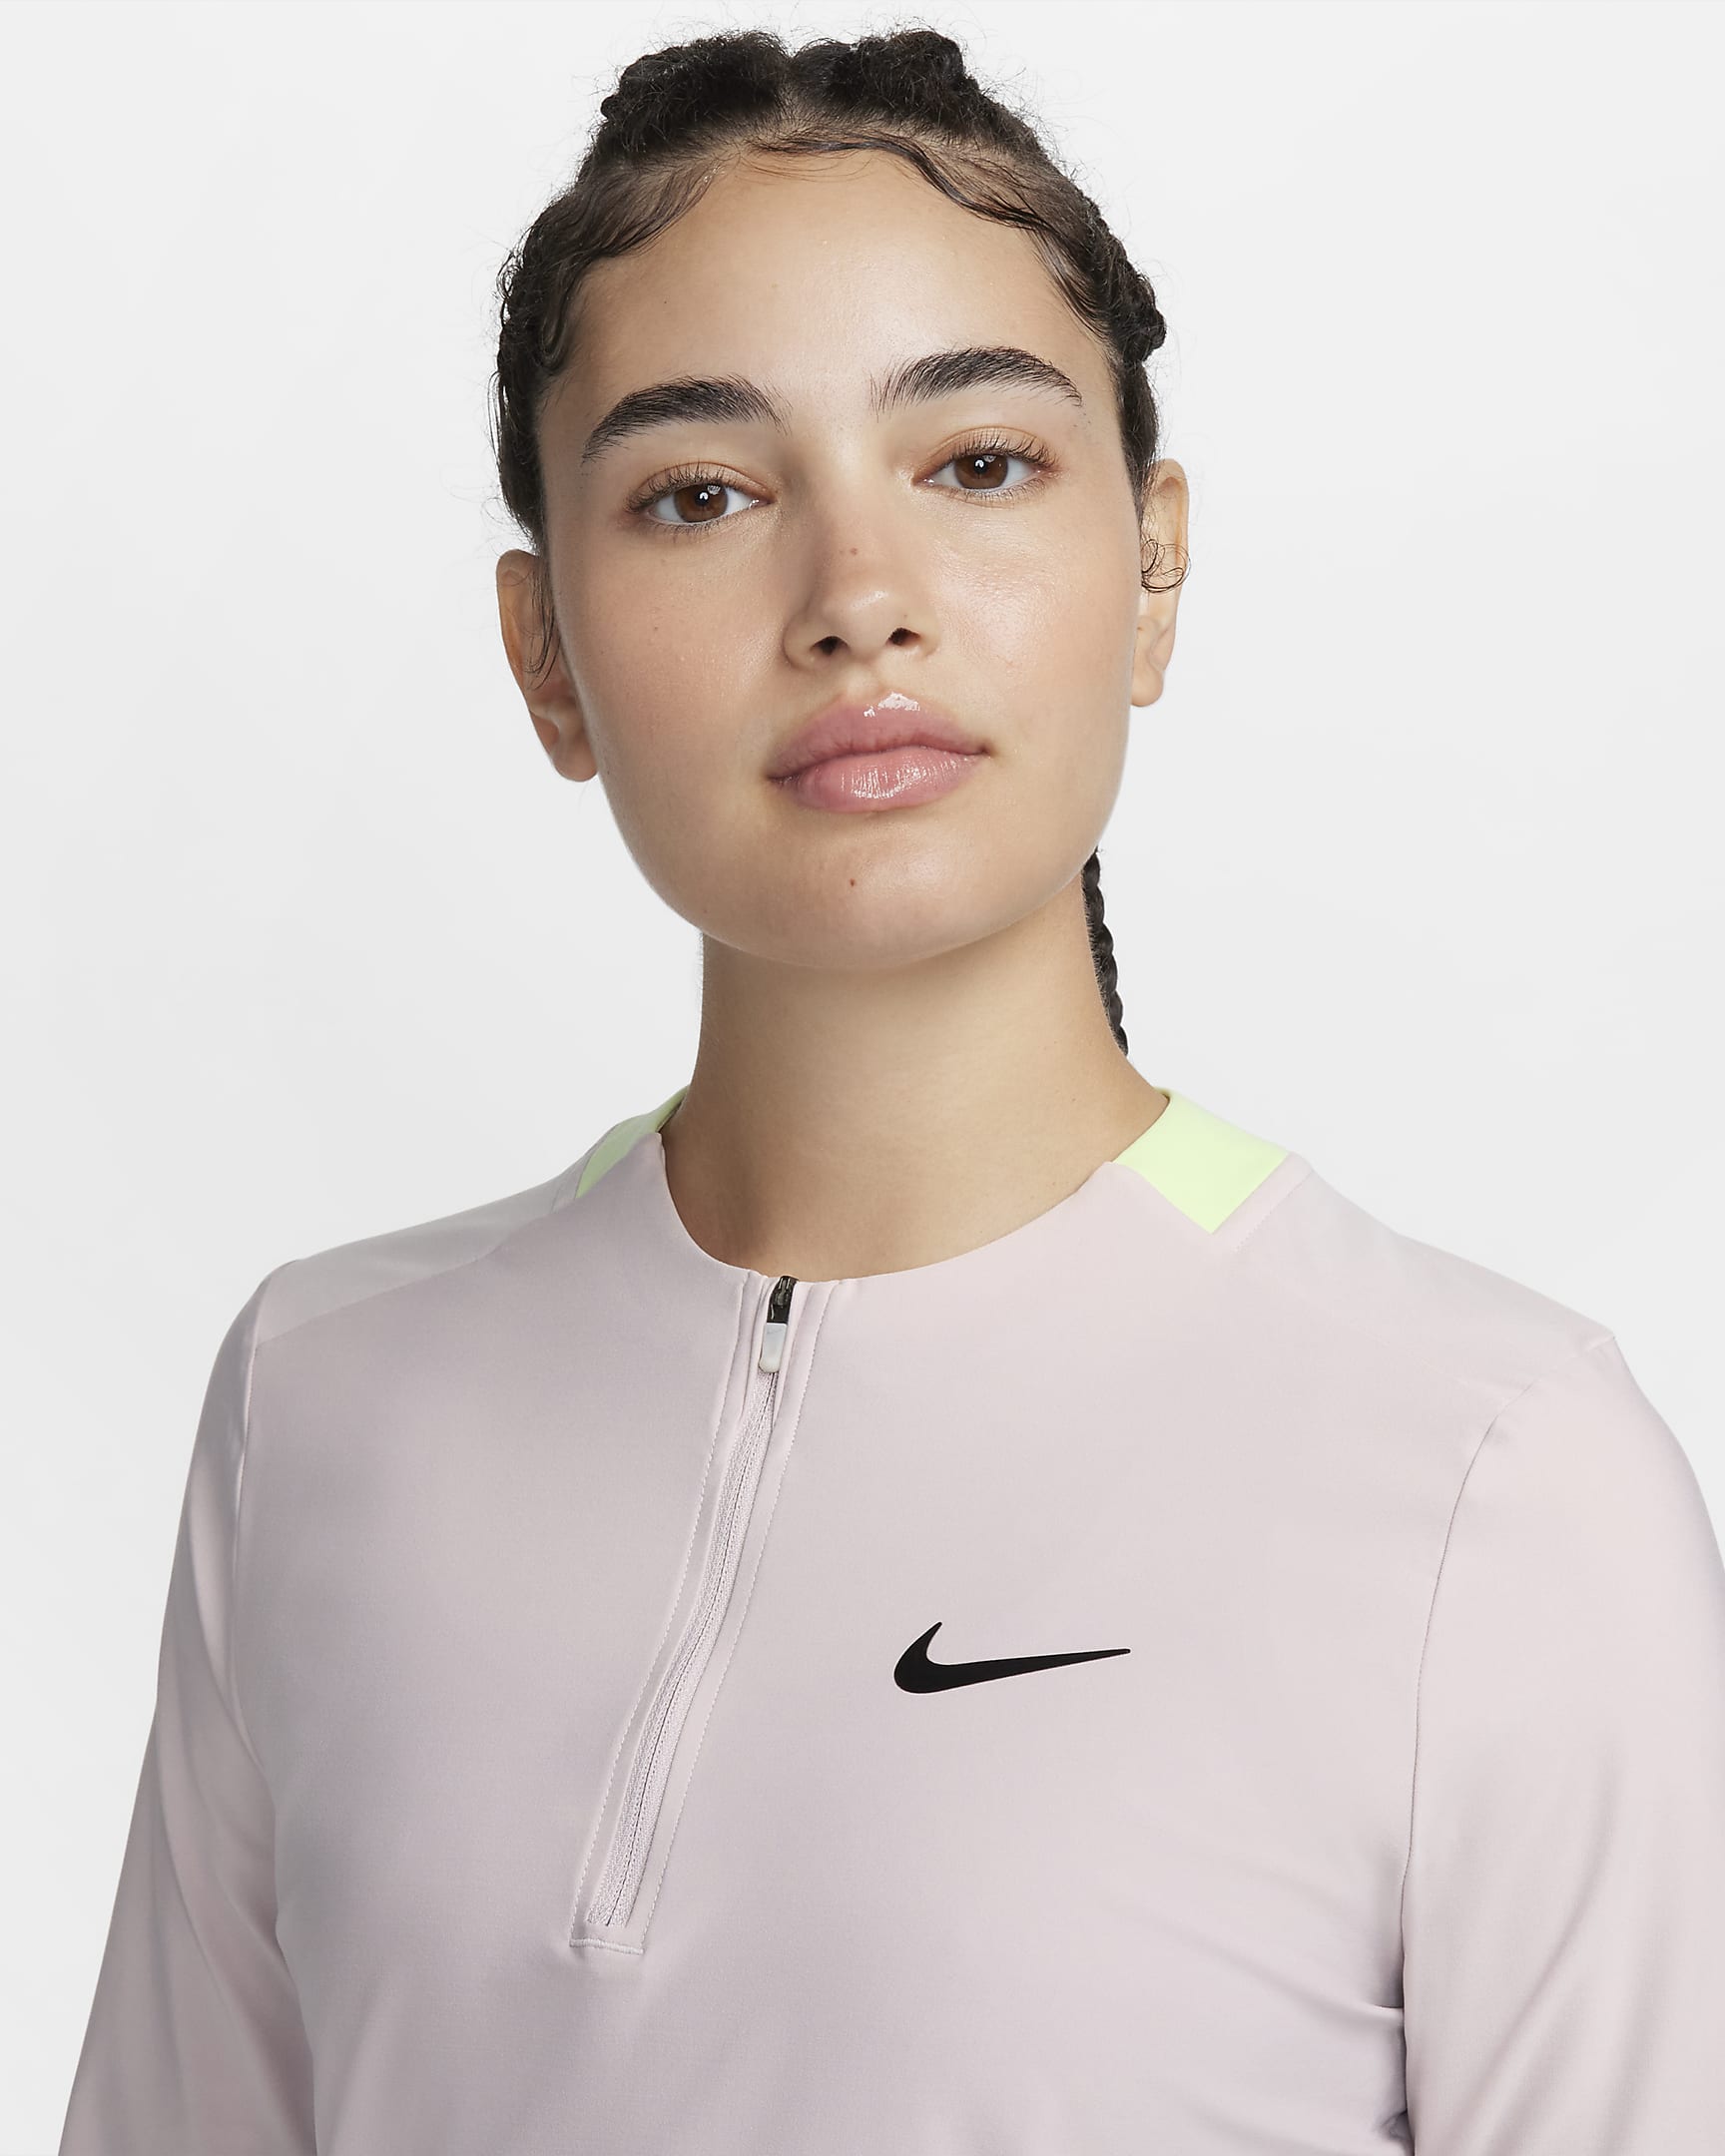 Capa intermedia de tenis Dri-FIT de cierre 1/4 para mujer NikeCourt ...